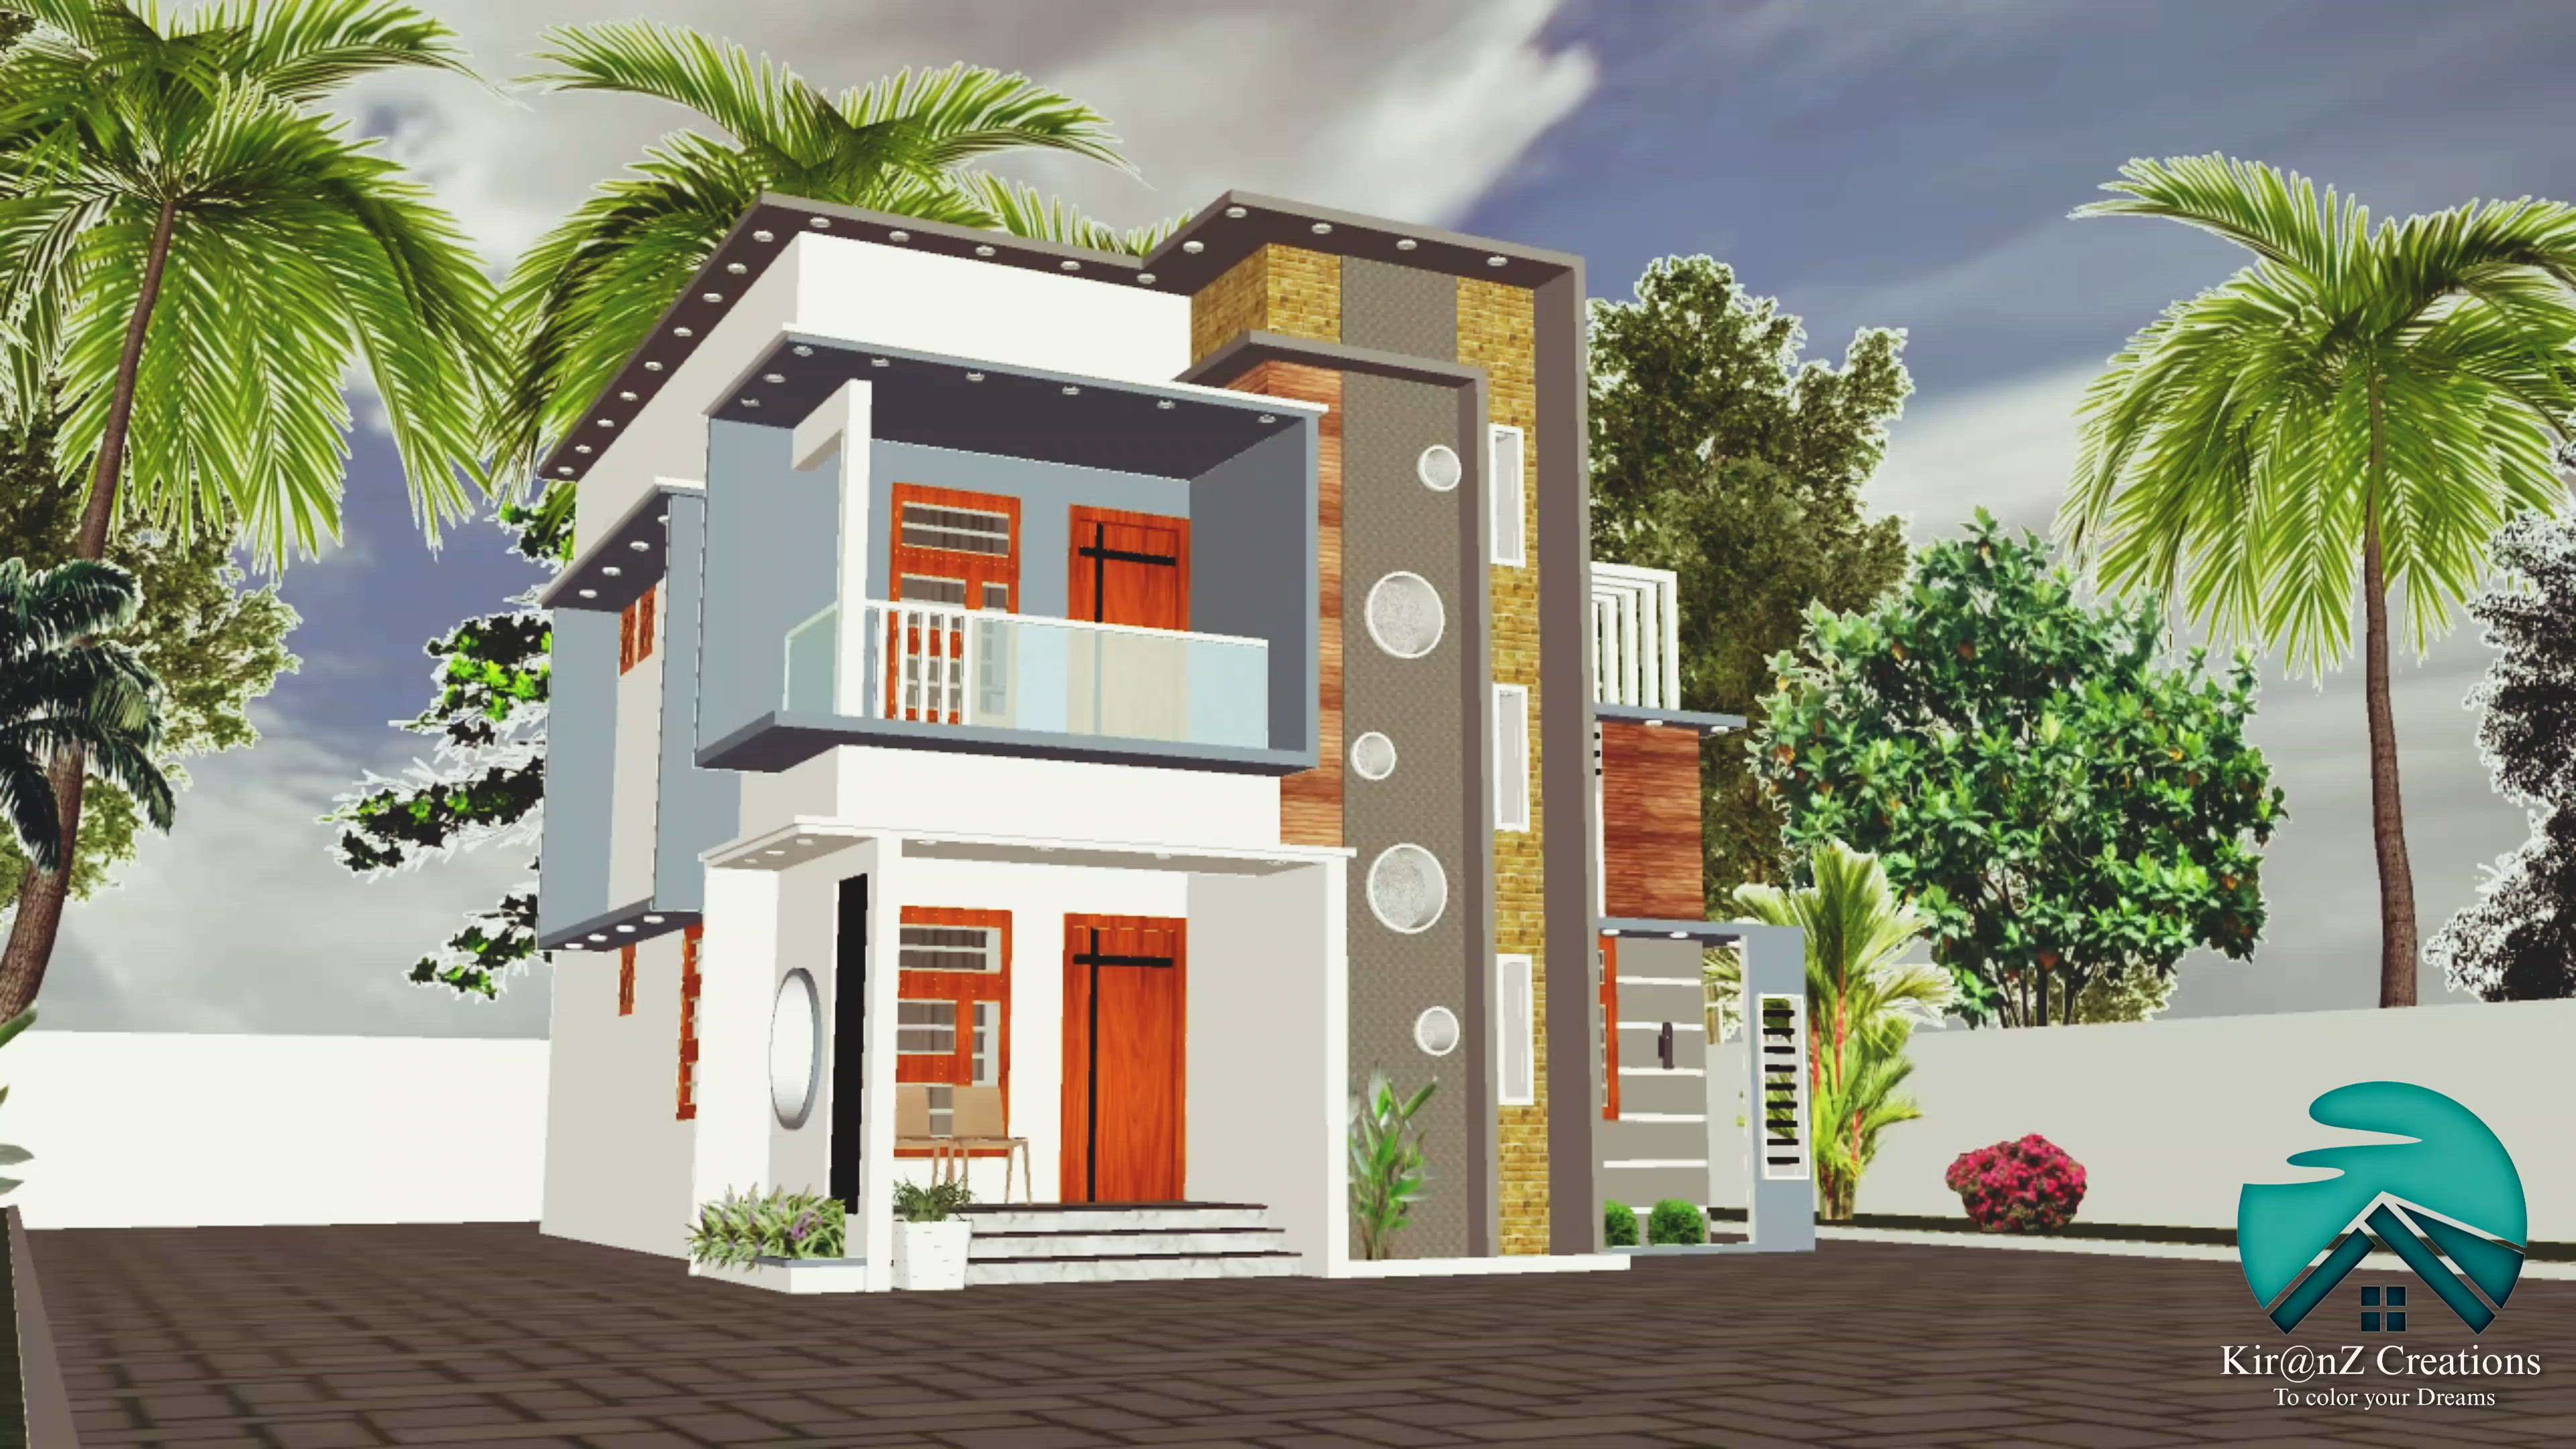 #30LakhHouse #3BHKHouse  #3dhouse  #two-story  #KeralaStyleHouse  #ContemporaryHouse  #3DPlans